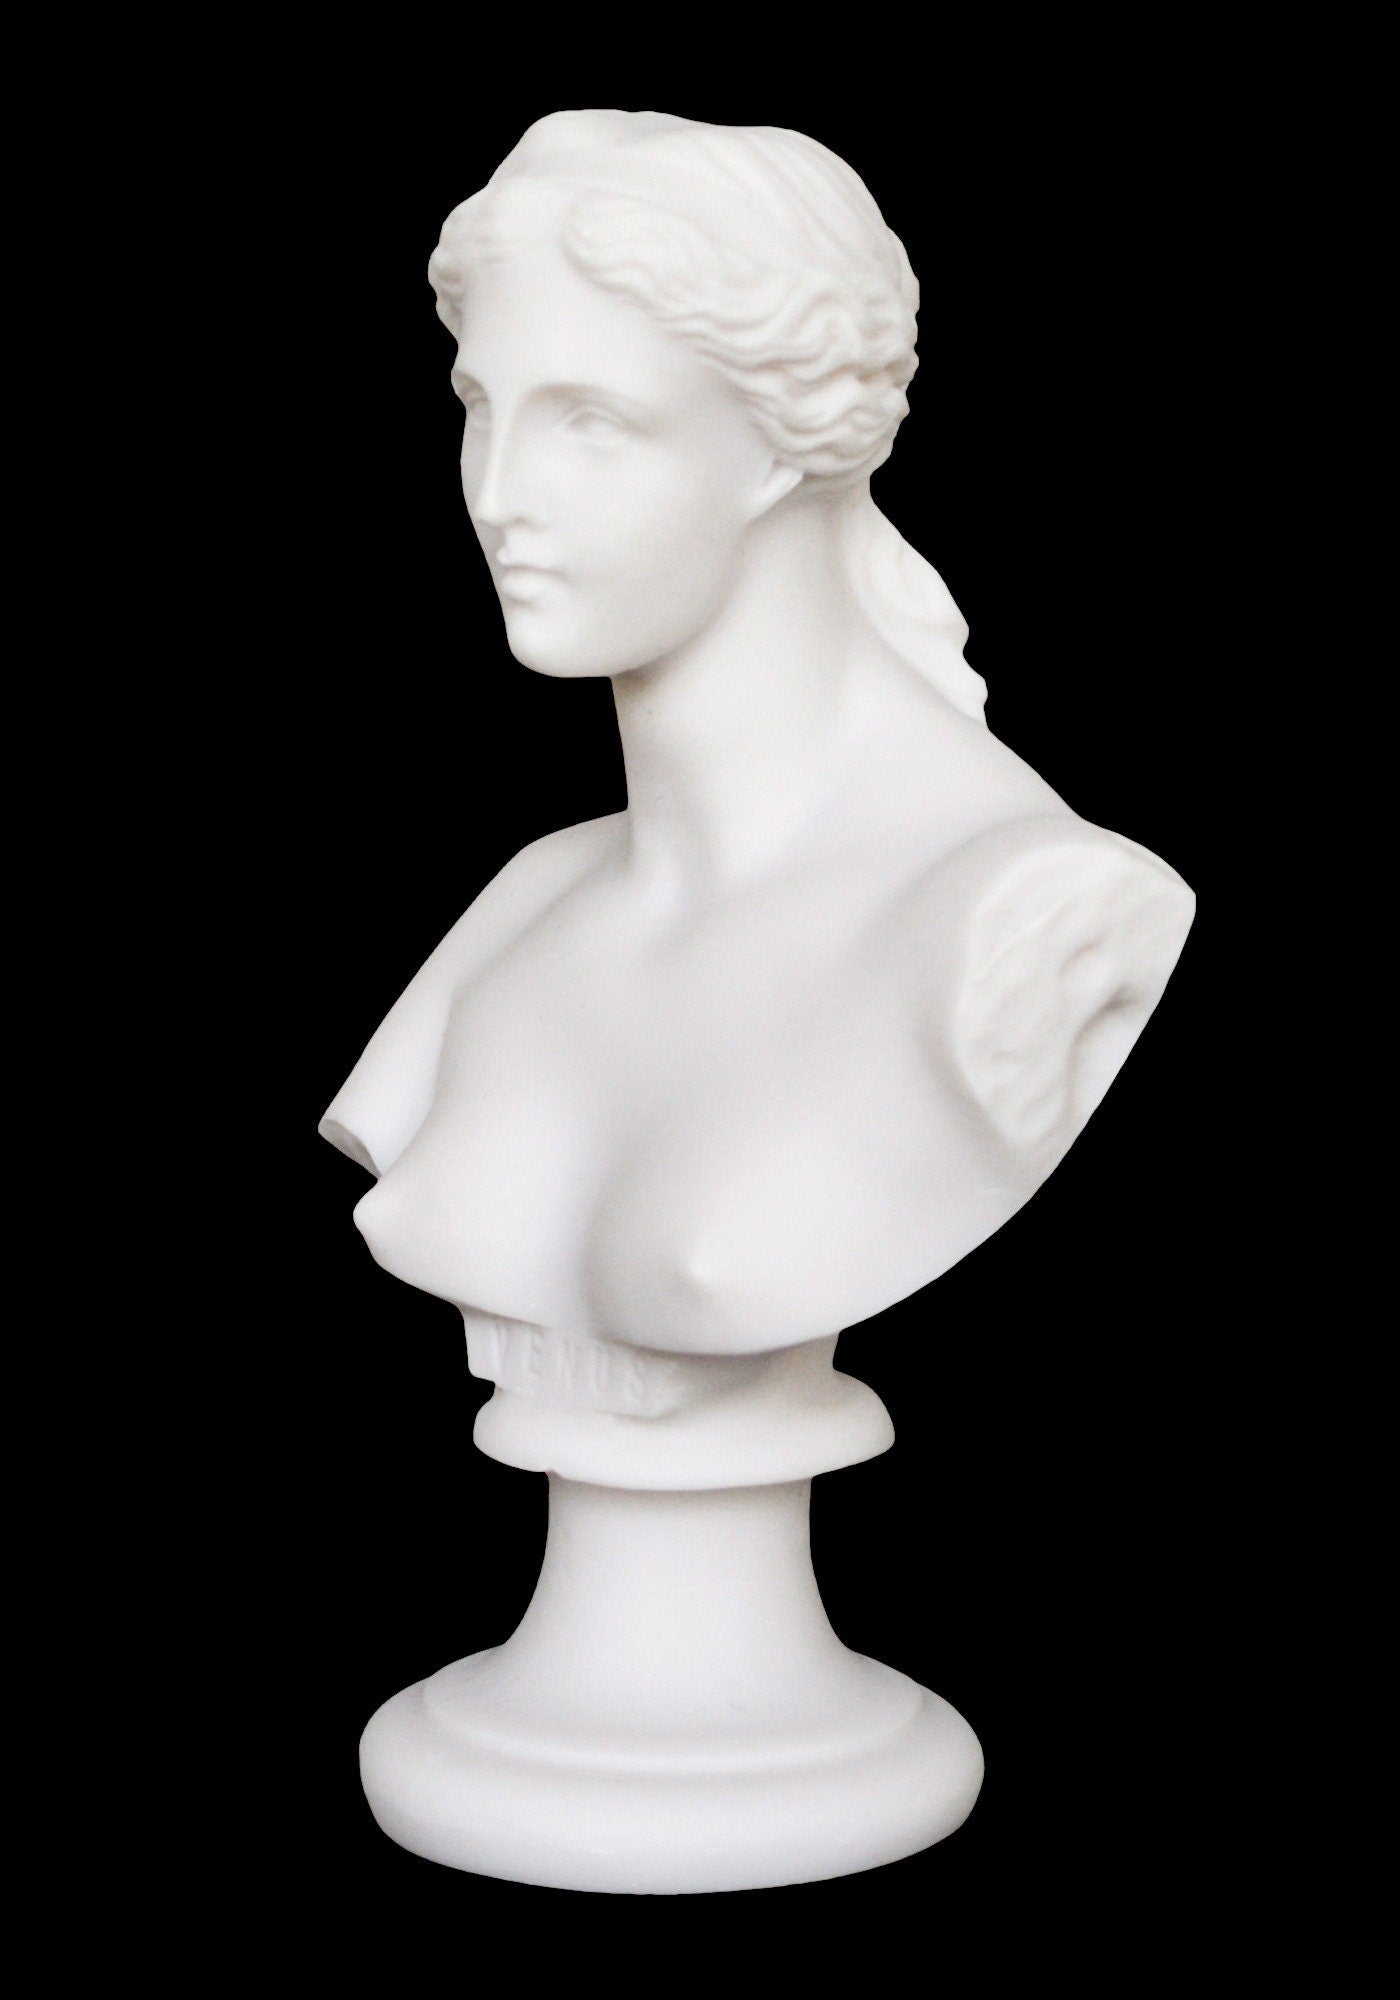 Aphrodite Venus Bust - Greek Roman Goddess of Love, Beauty, Sexual Pleasure, Fertility - Alabaster Statue